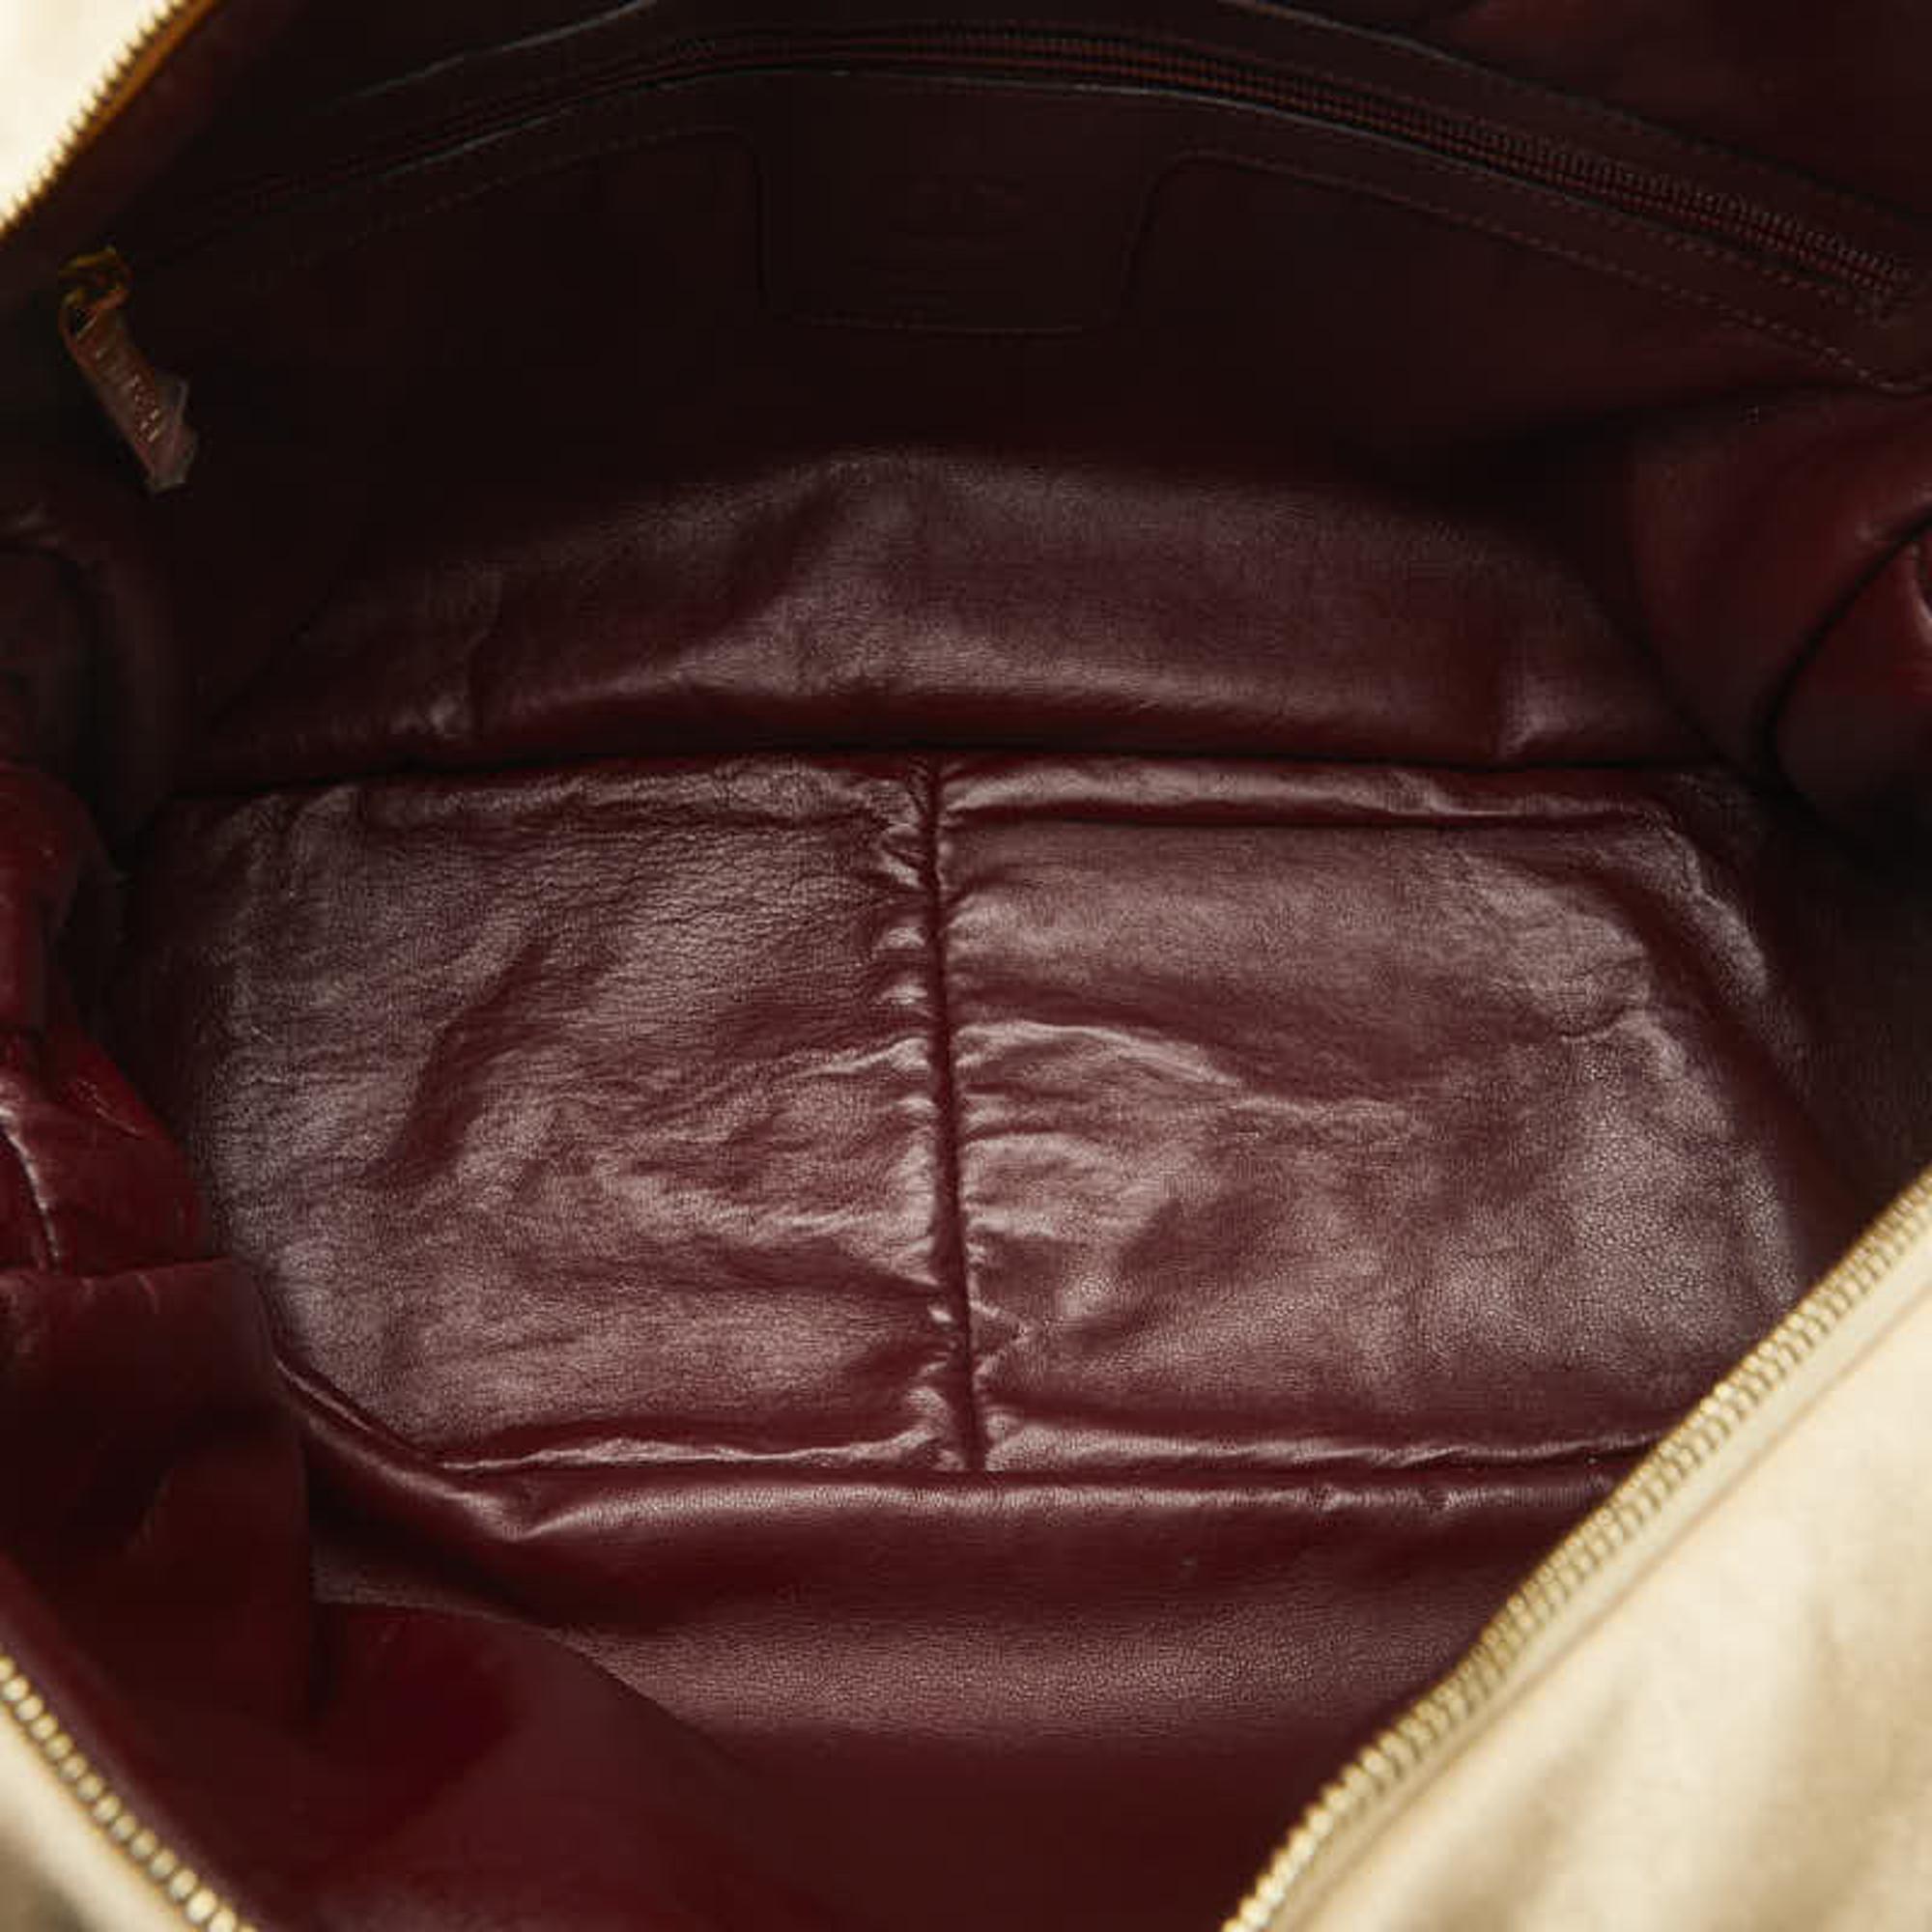 Chanel Gold Leather CC Cocoon Handbag